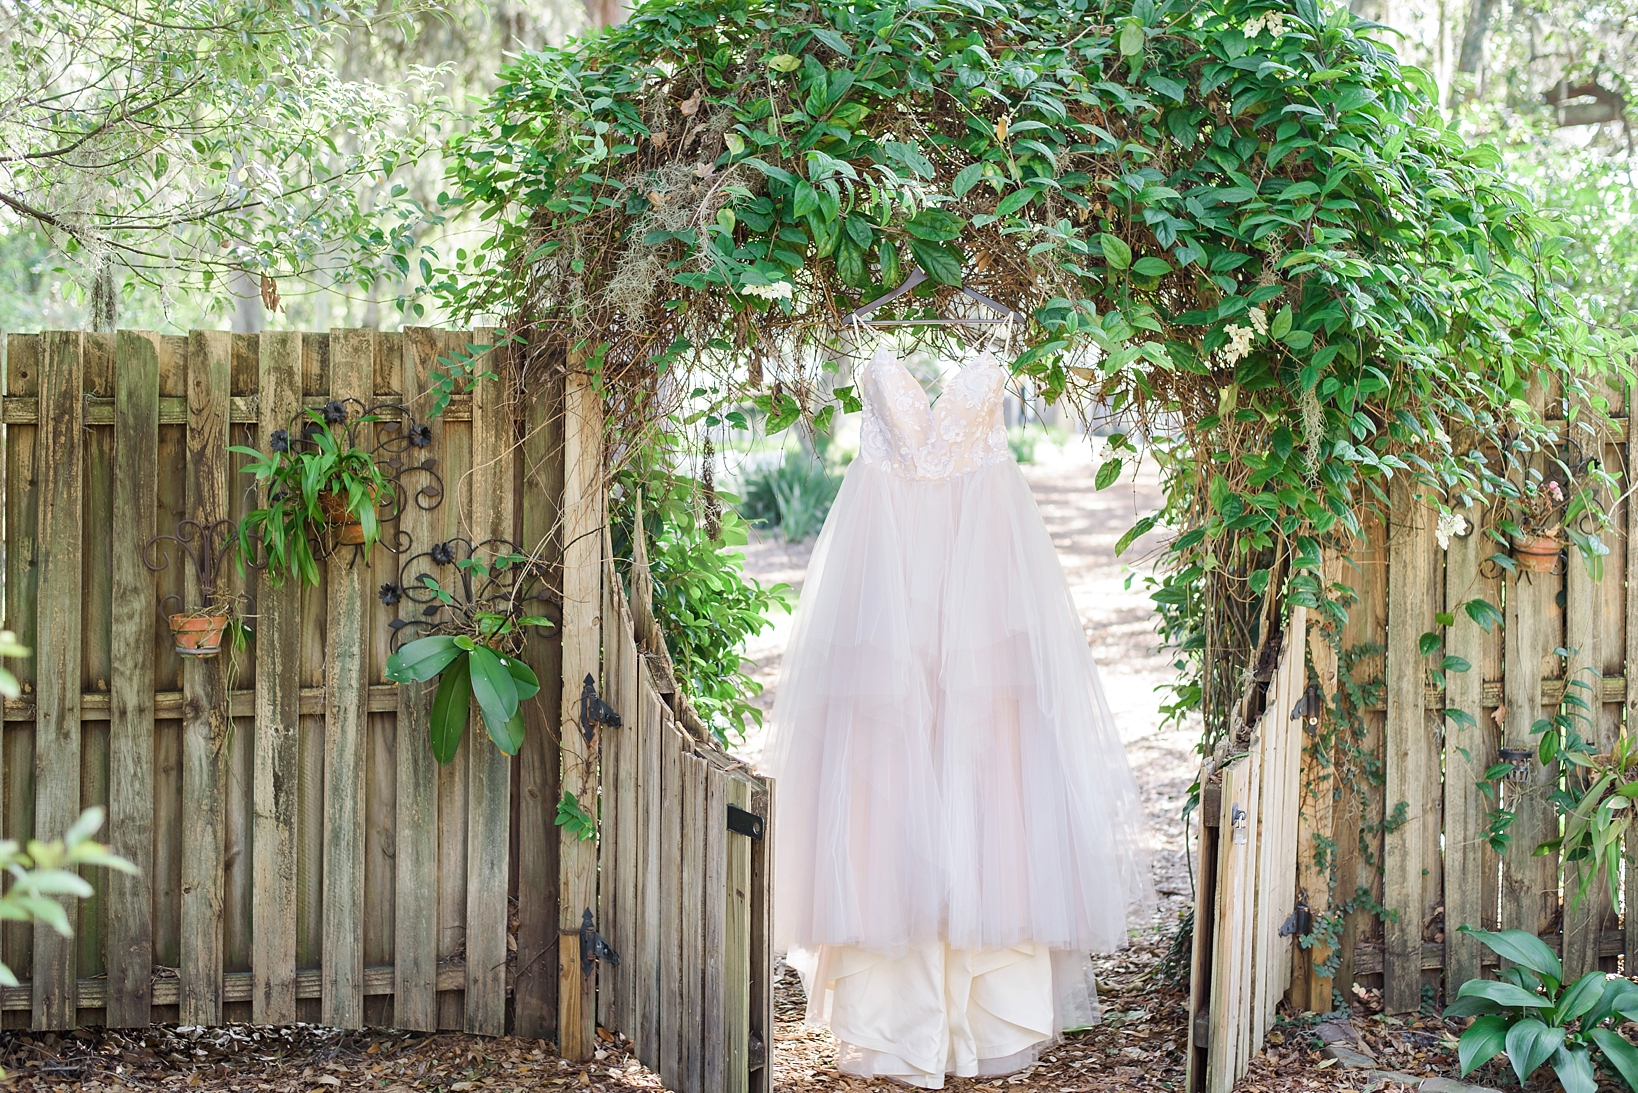 Hayley Paige Wedding Dress hanging on trellis 